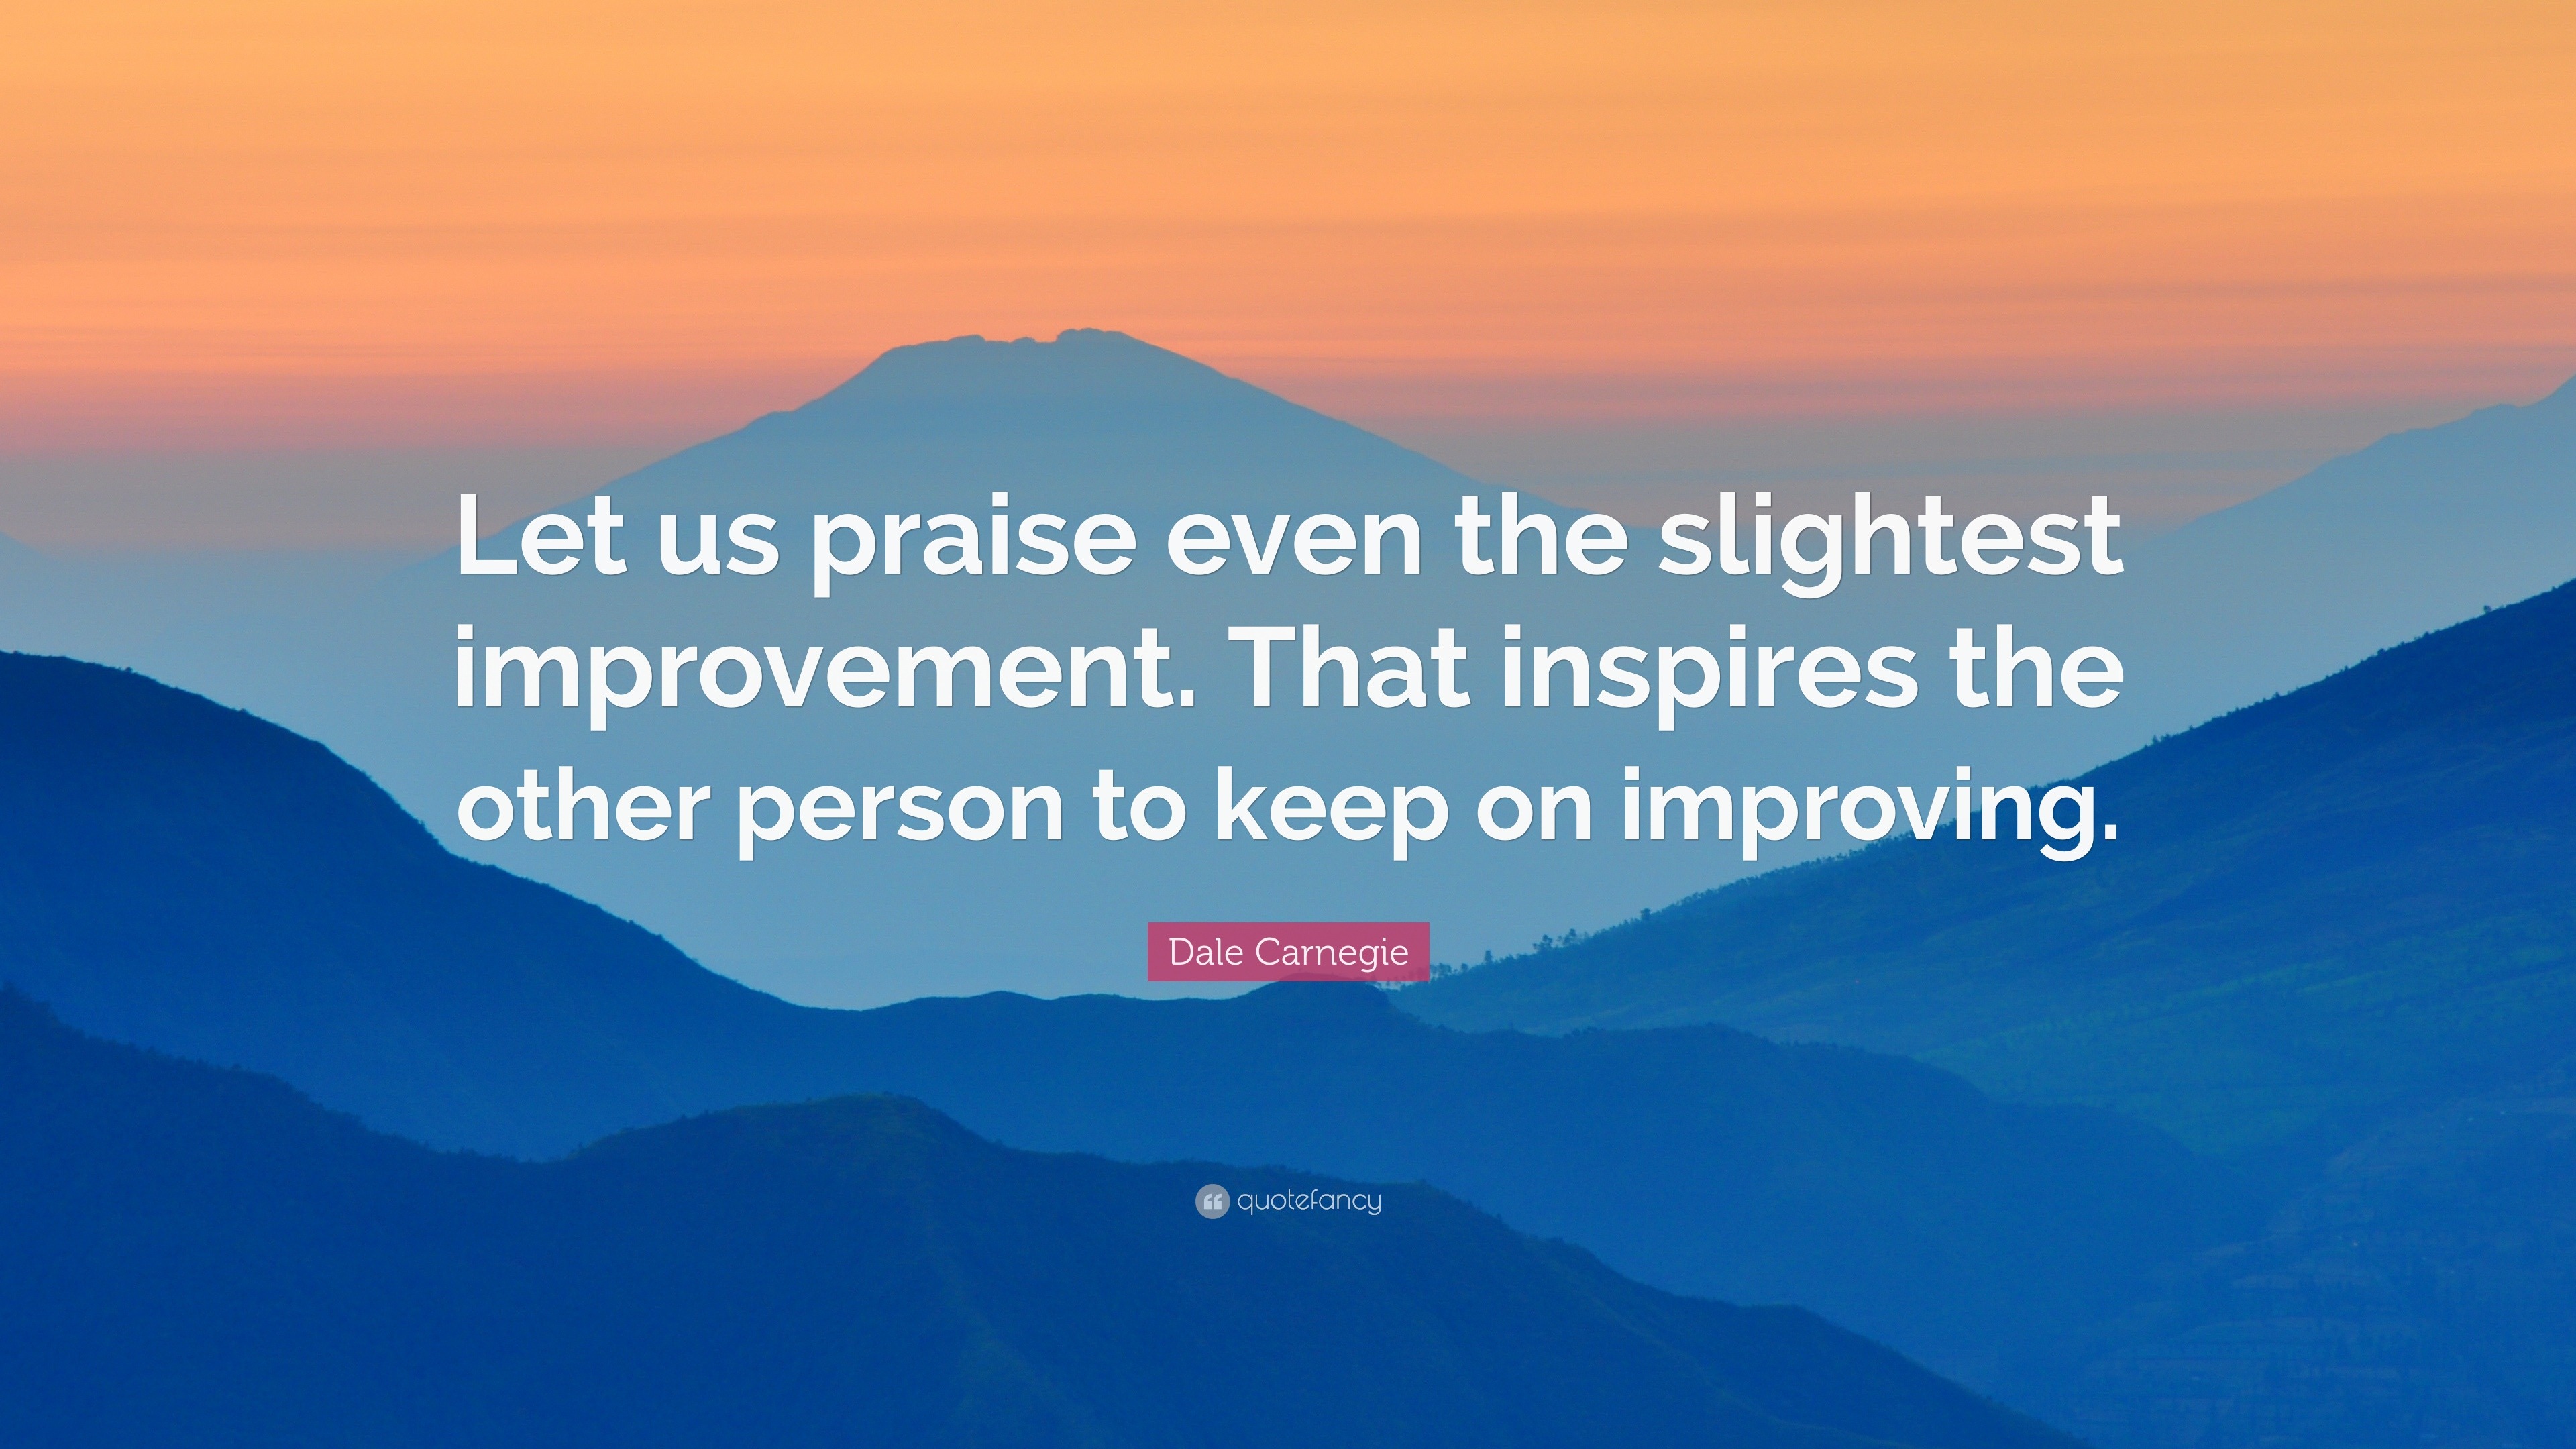 Dale Carnegie Quote: “Let us praise even the slightest improvement ...